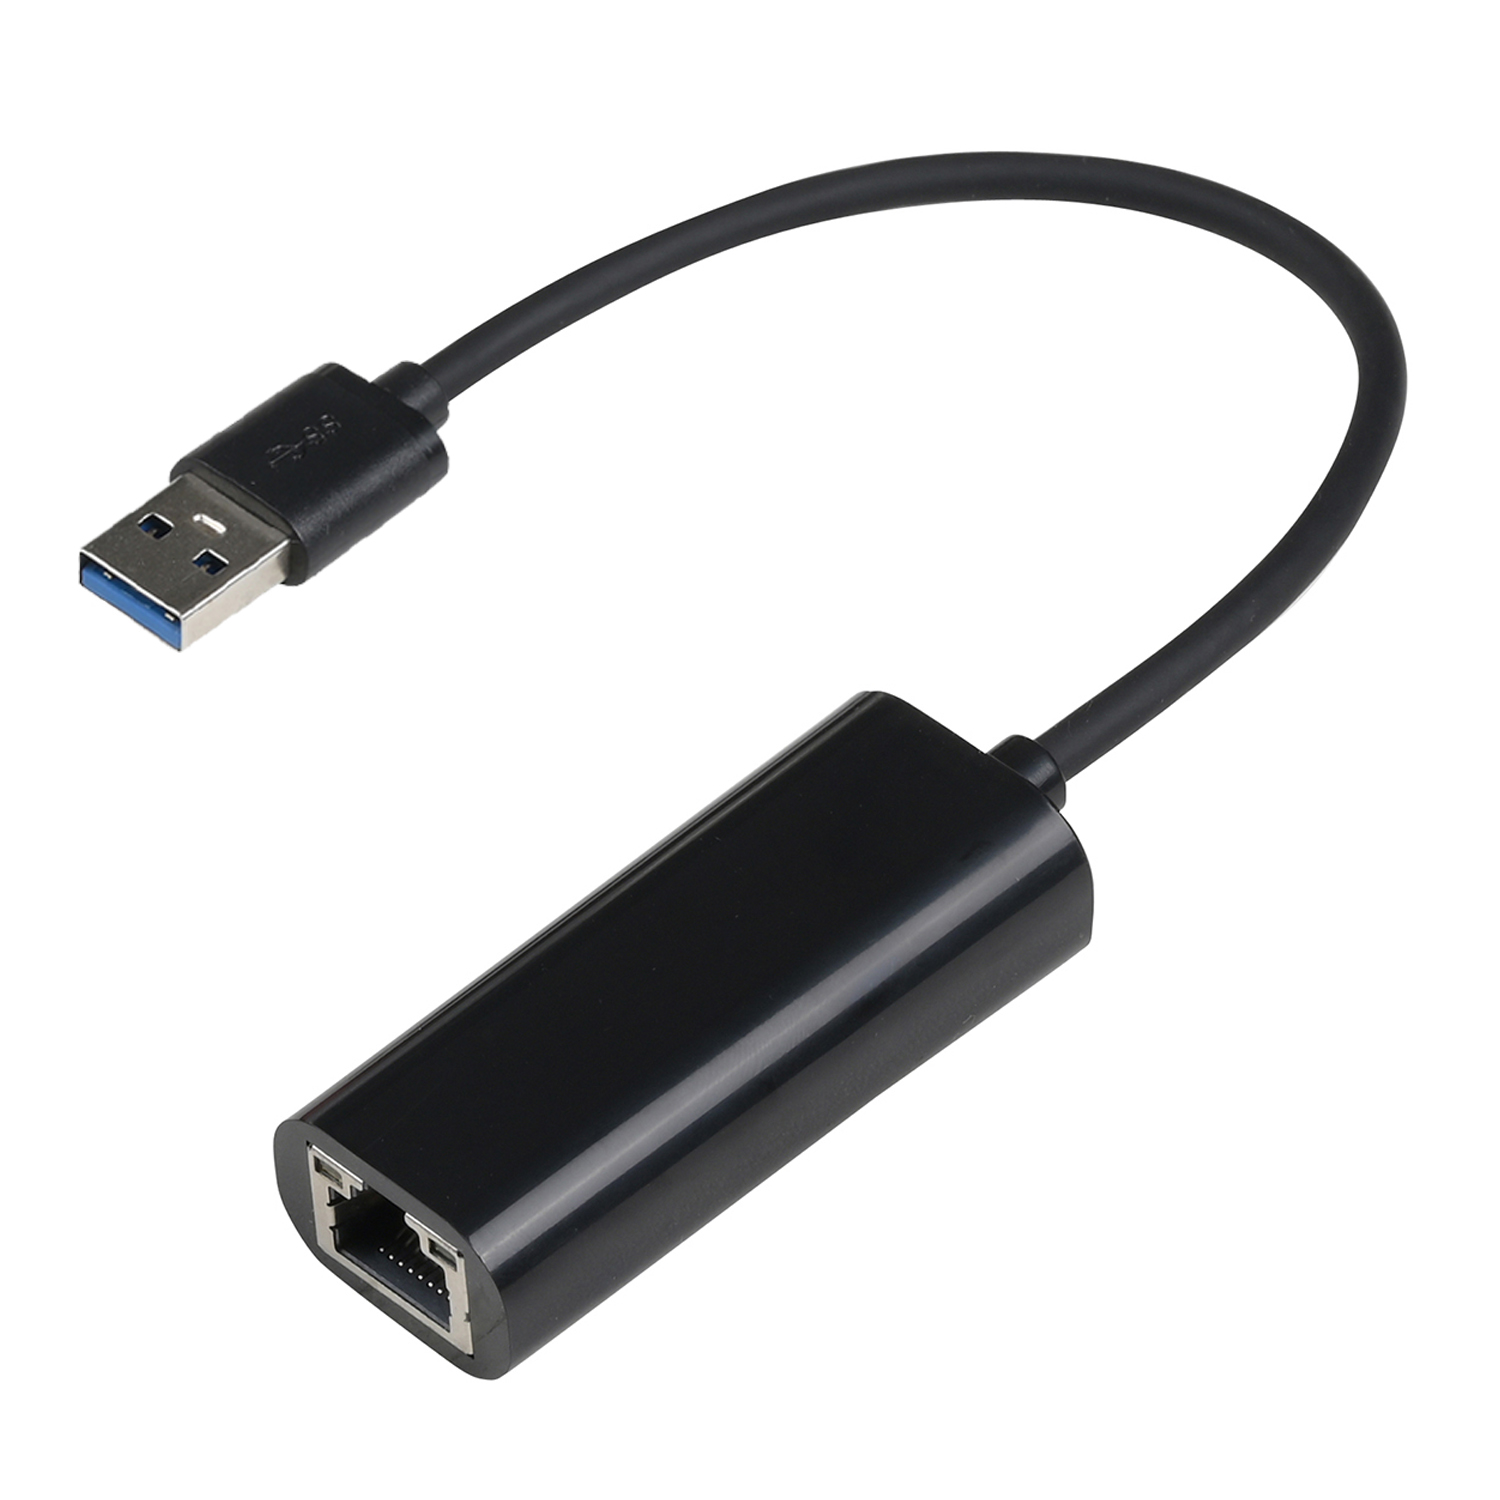 USB 3.0 to gigabit ethernet adapter